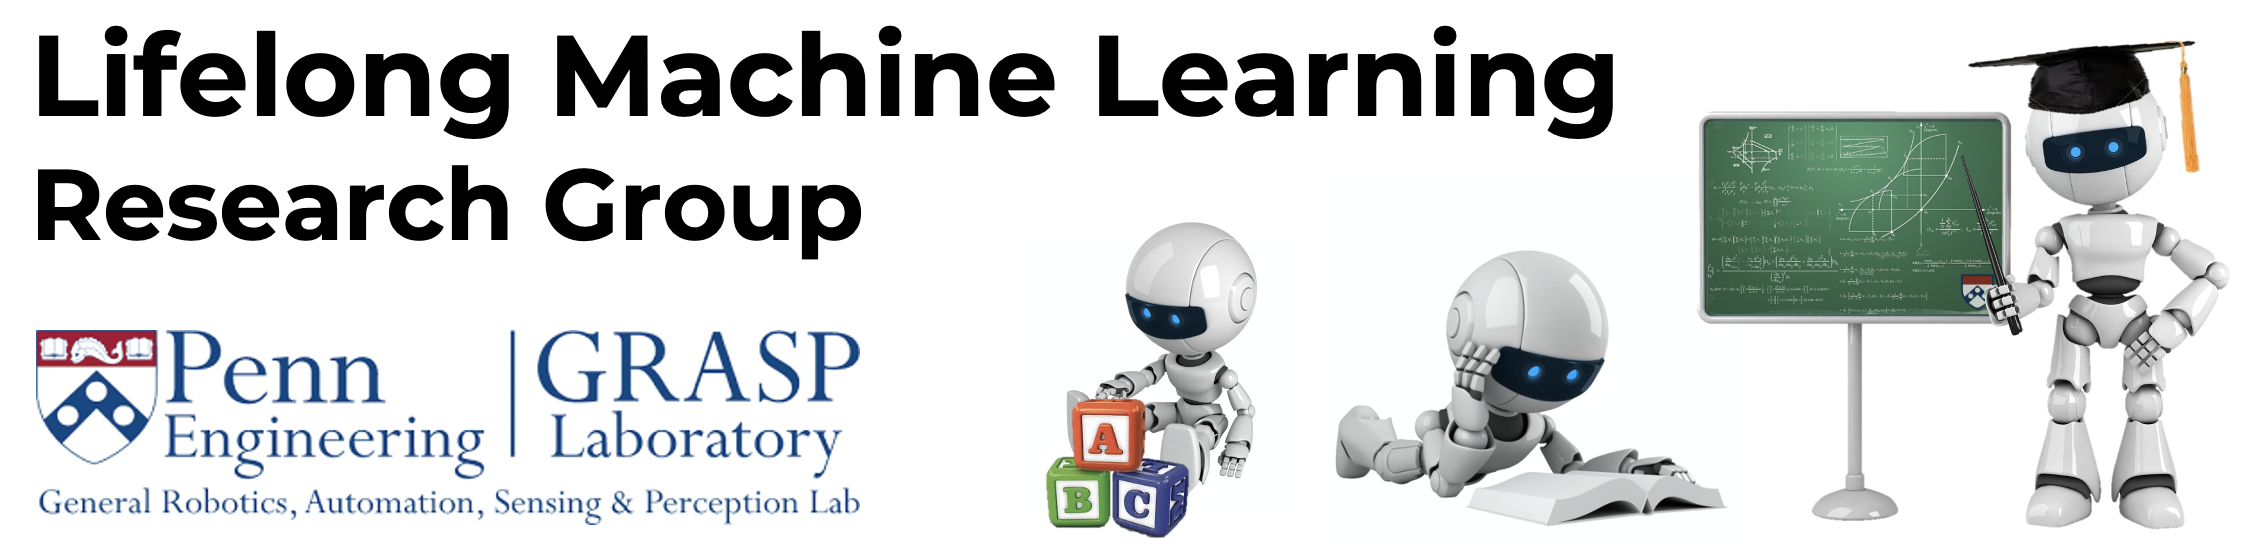 Lifelong Machine Learning Research Group Logo